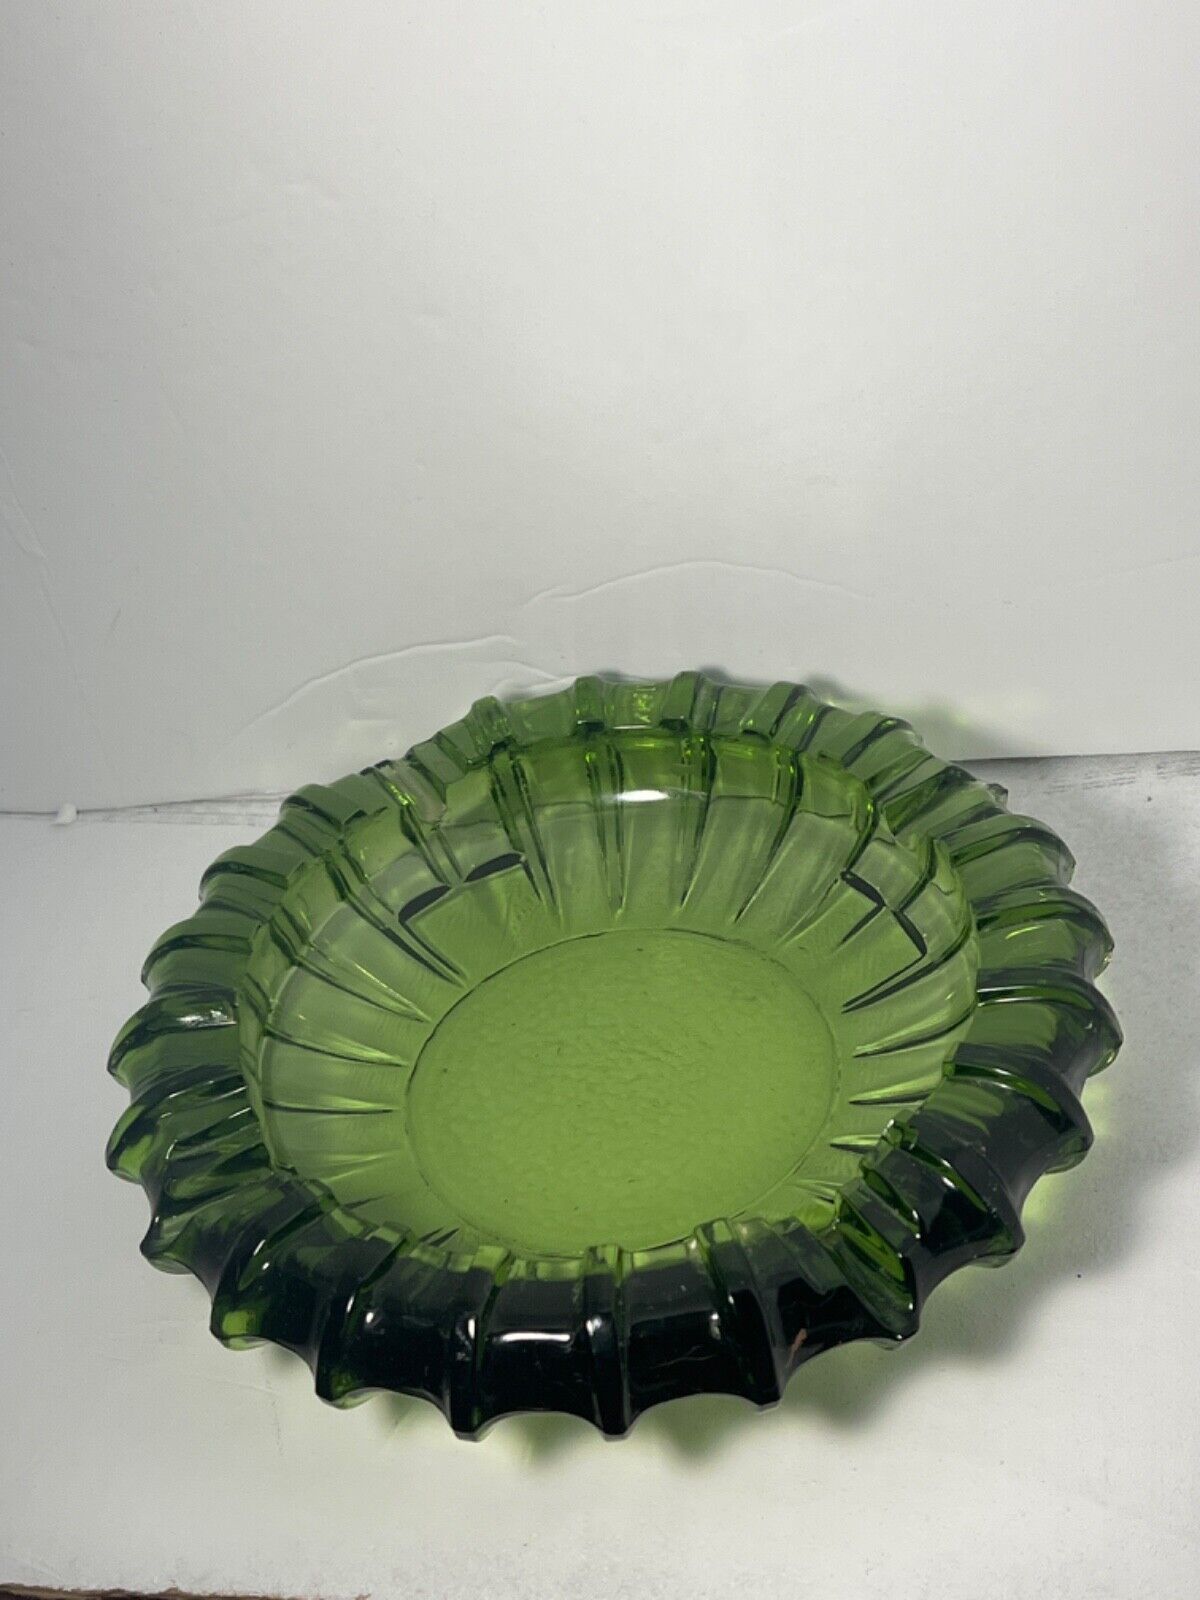 Vtg Fostoria Emerald Green 1940's Large Round Ashtray Pressed Glass Design  5